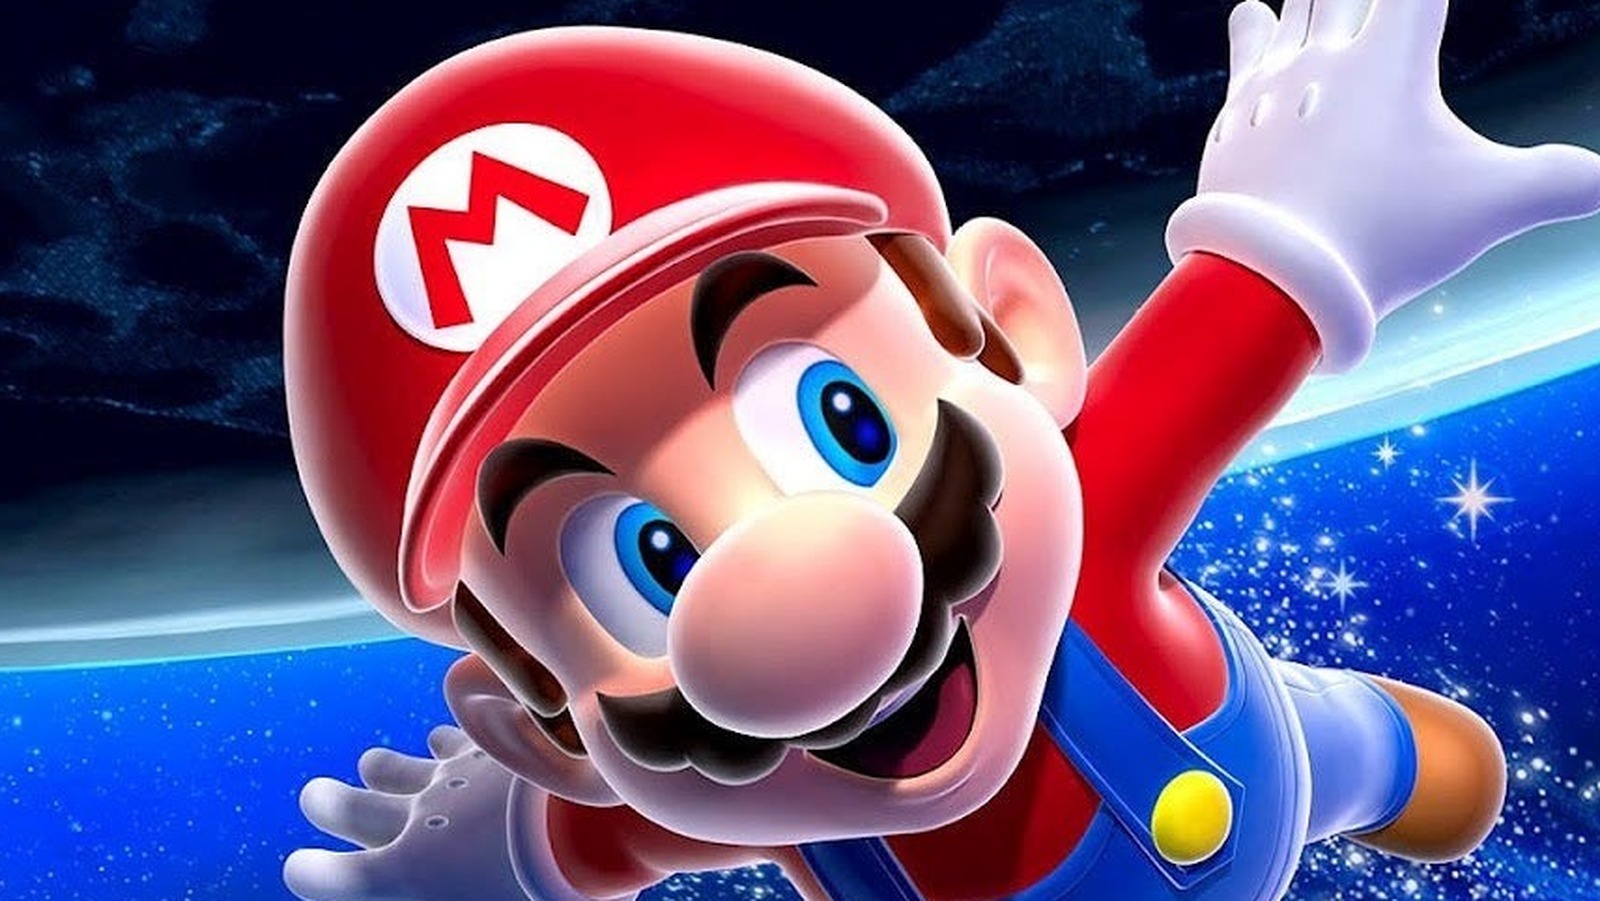 Buy Super Mario Odyssey Nintendo Switch Key (North America)